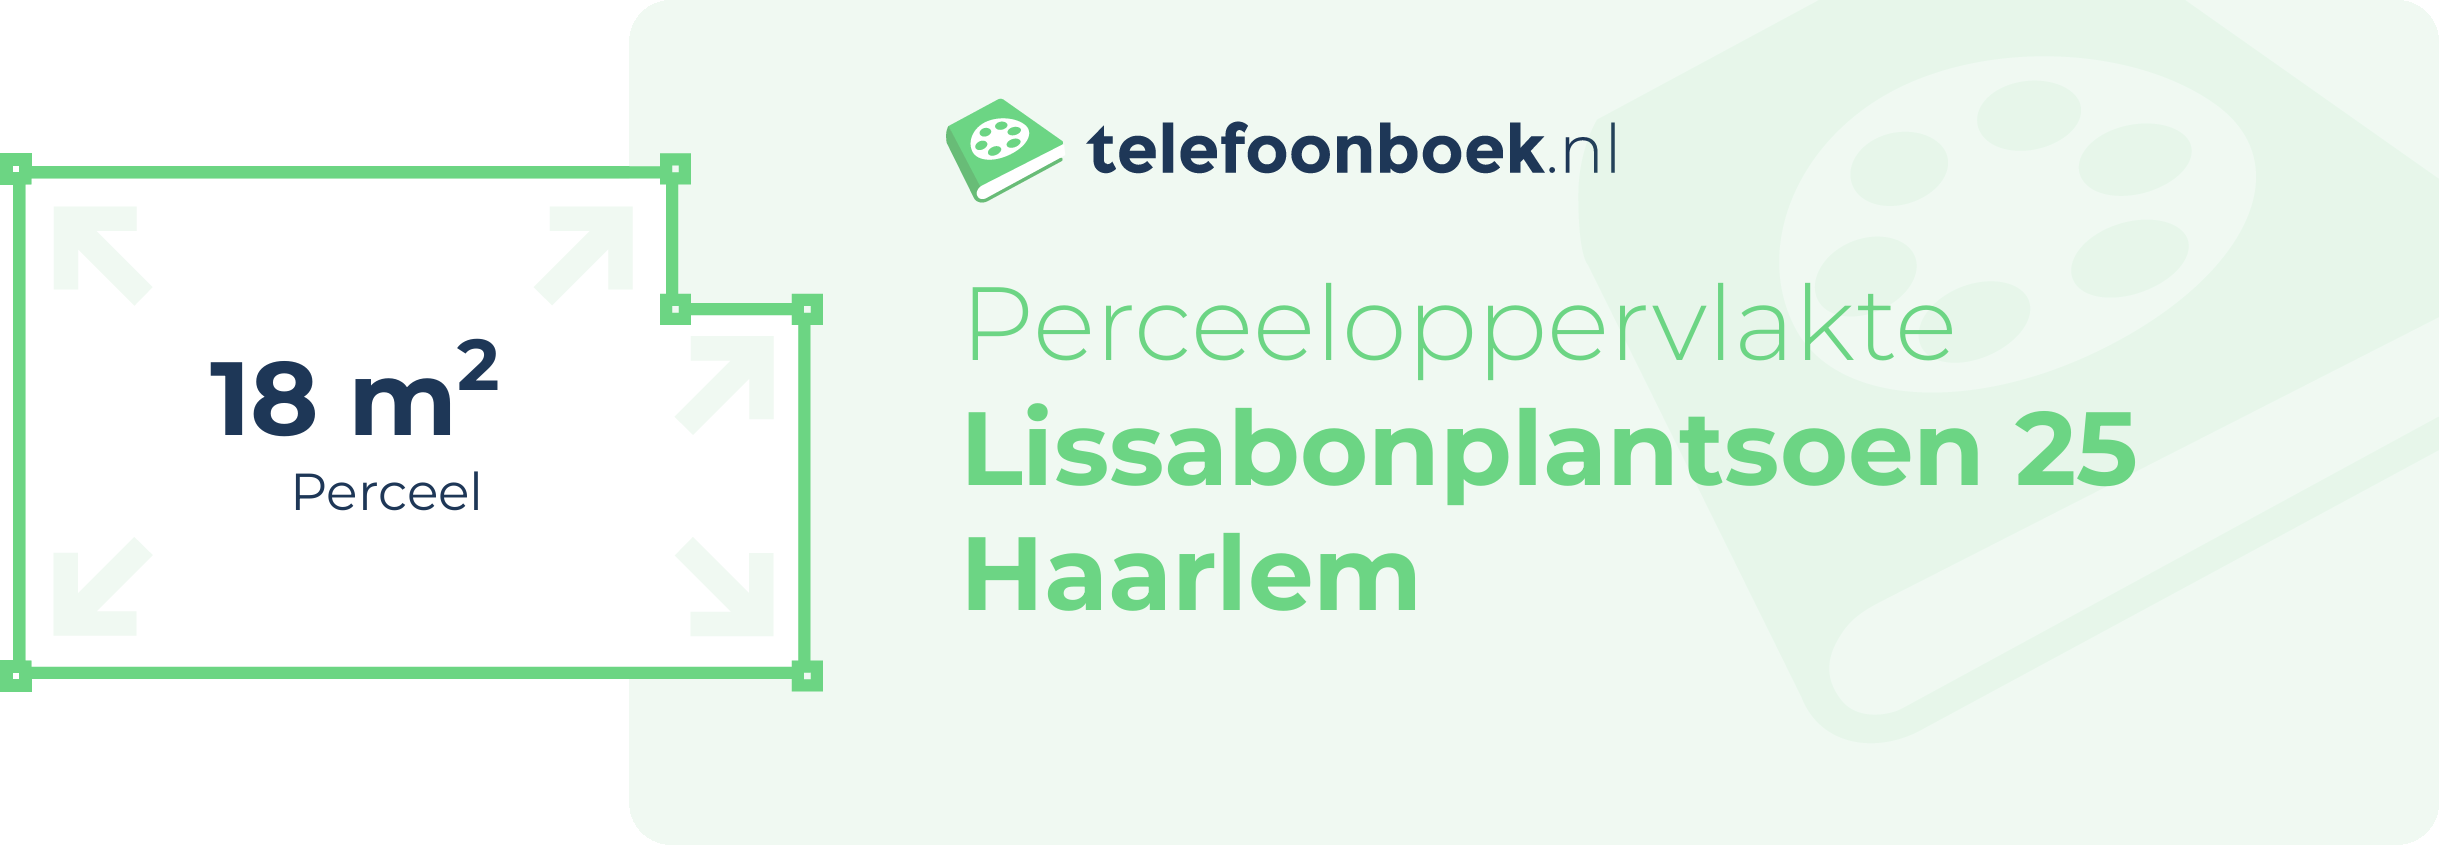 Perceeloppervlakte Lissabonplantsoen 25 Haarlem